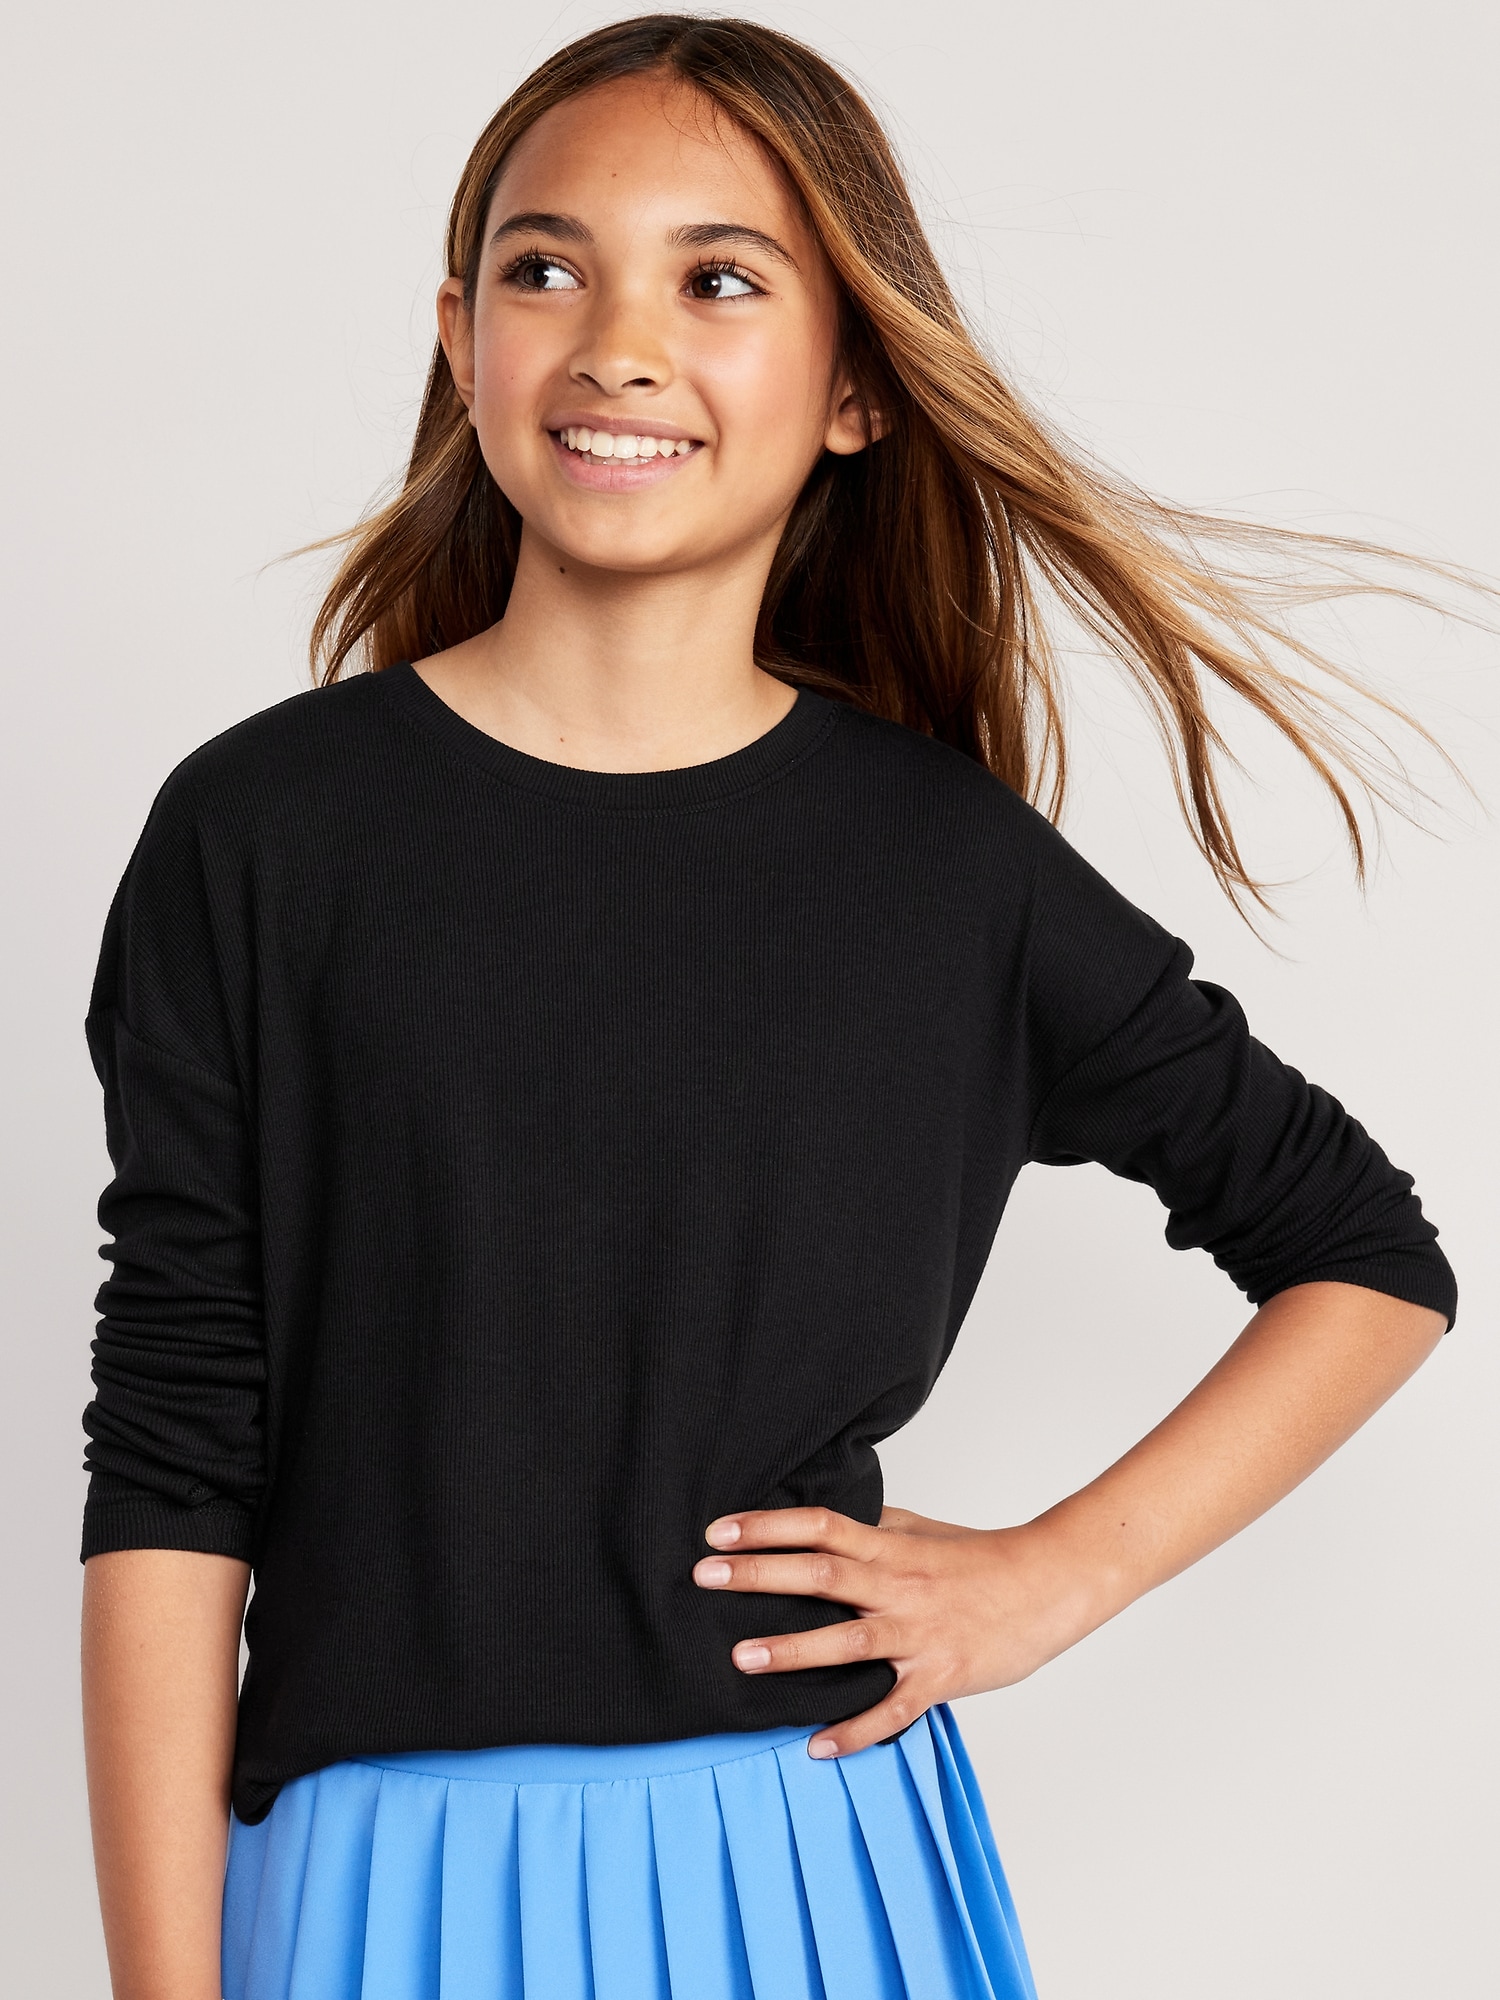 UltraLite Long-Sleeve Rib-Knit Tunic T-Shirt for Girls